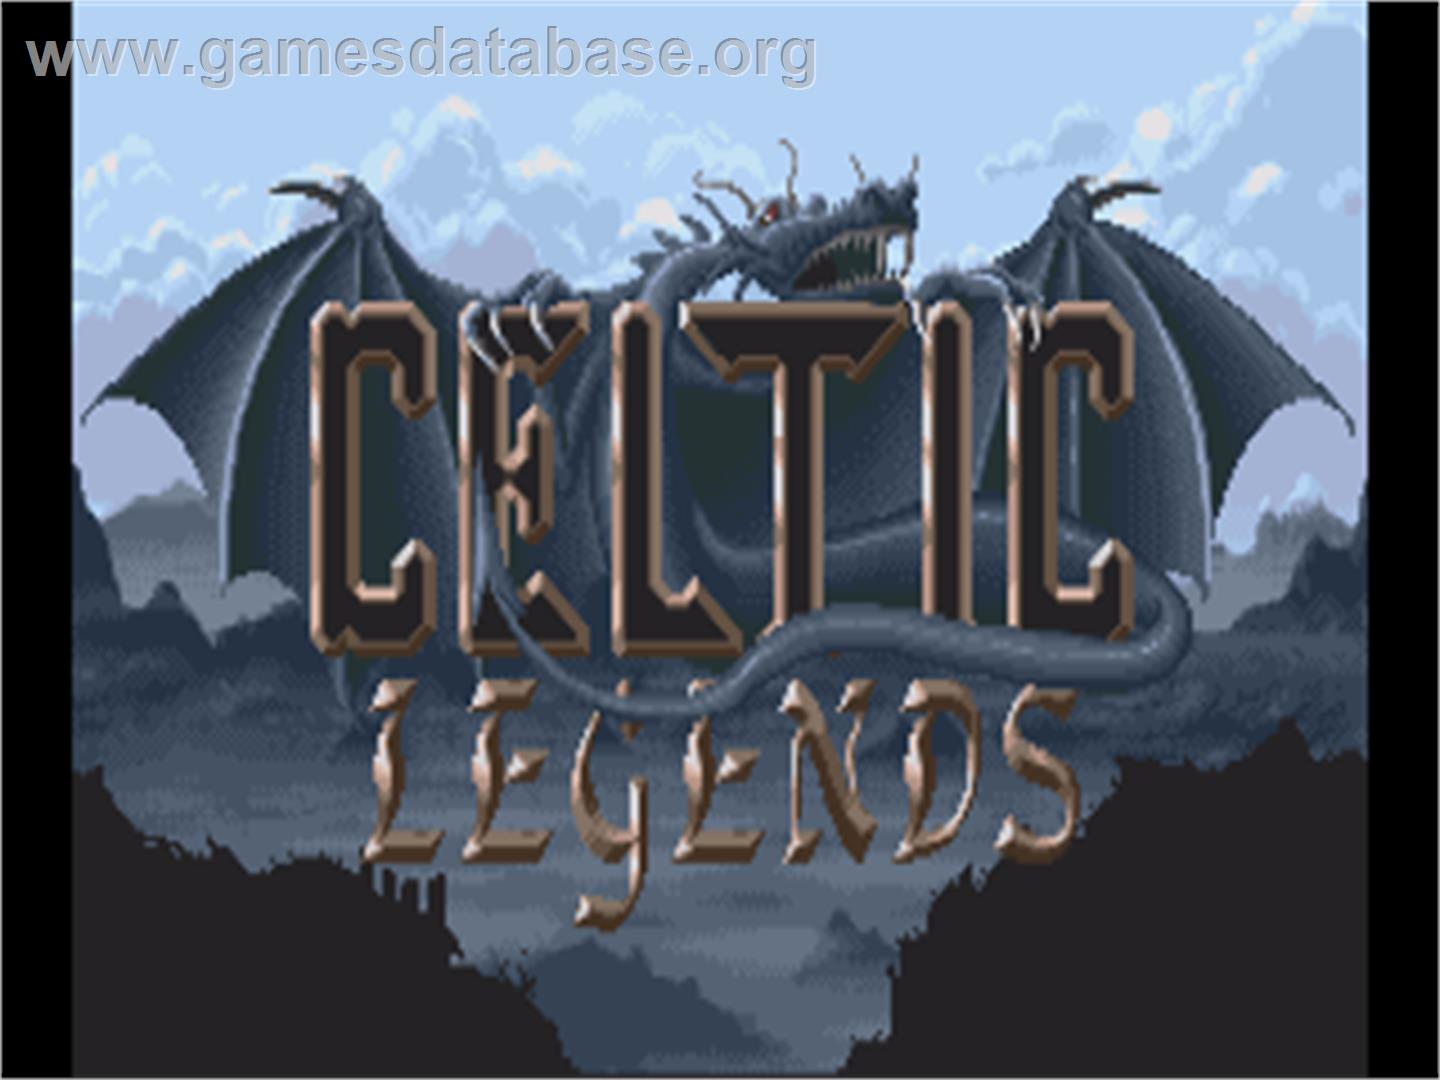 Celtic Legends - Commodore Amiga - Artwork - Title Screen